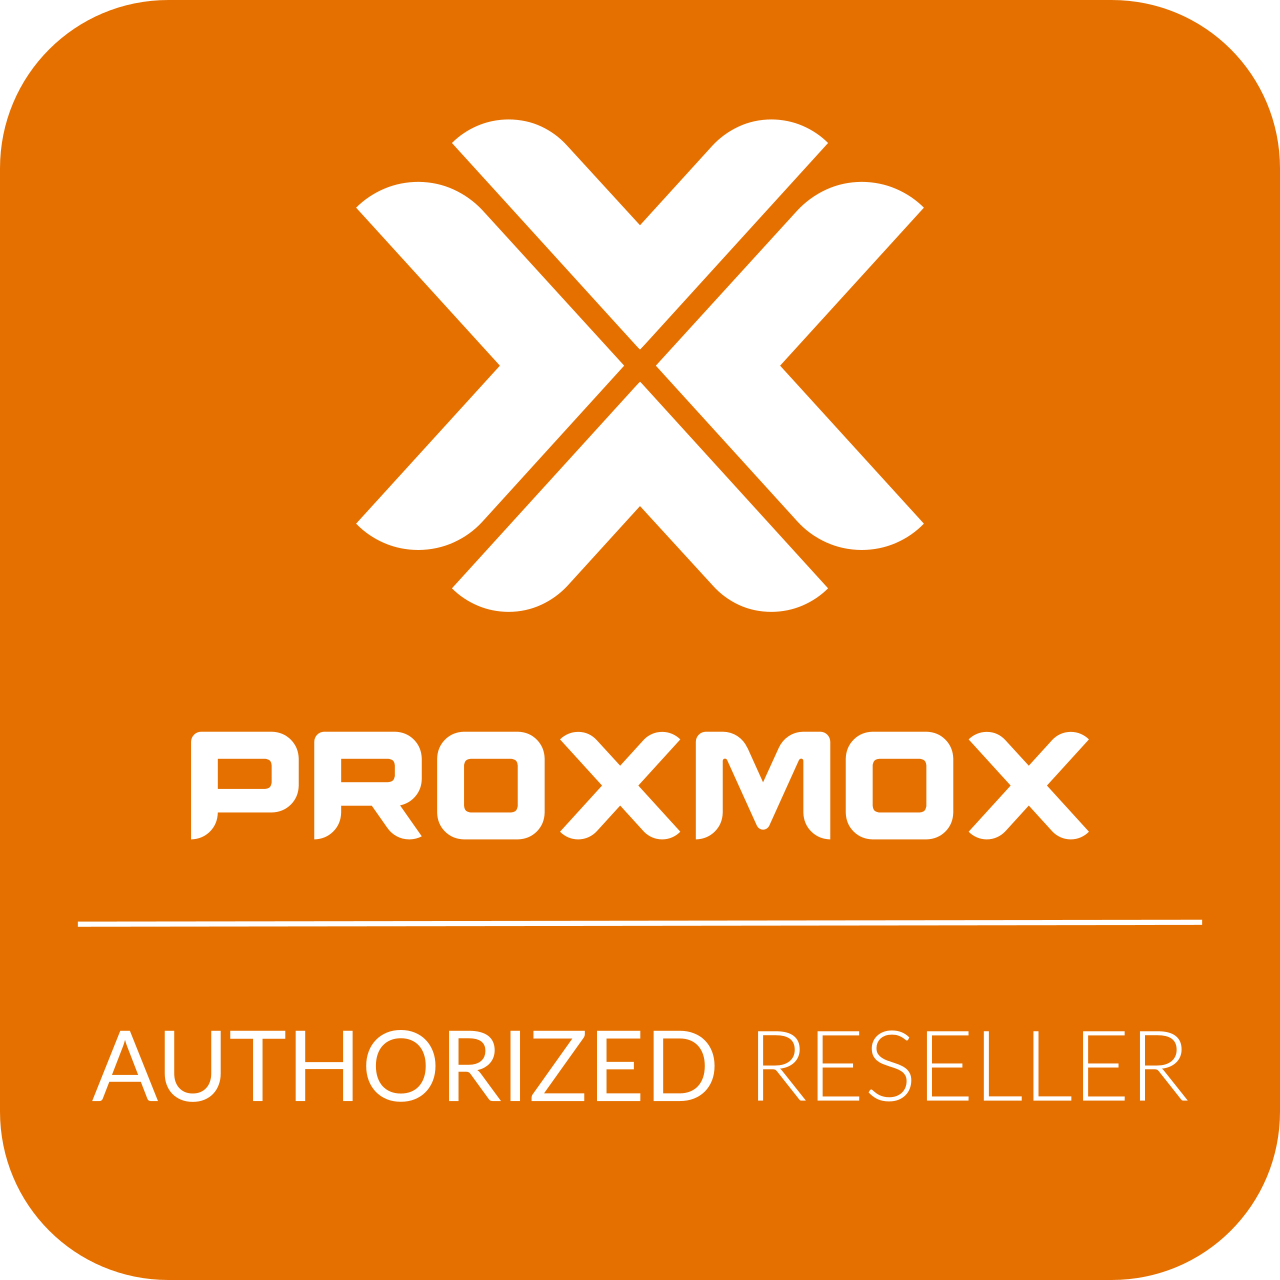 PROXMOX